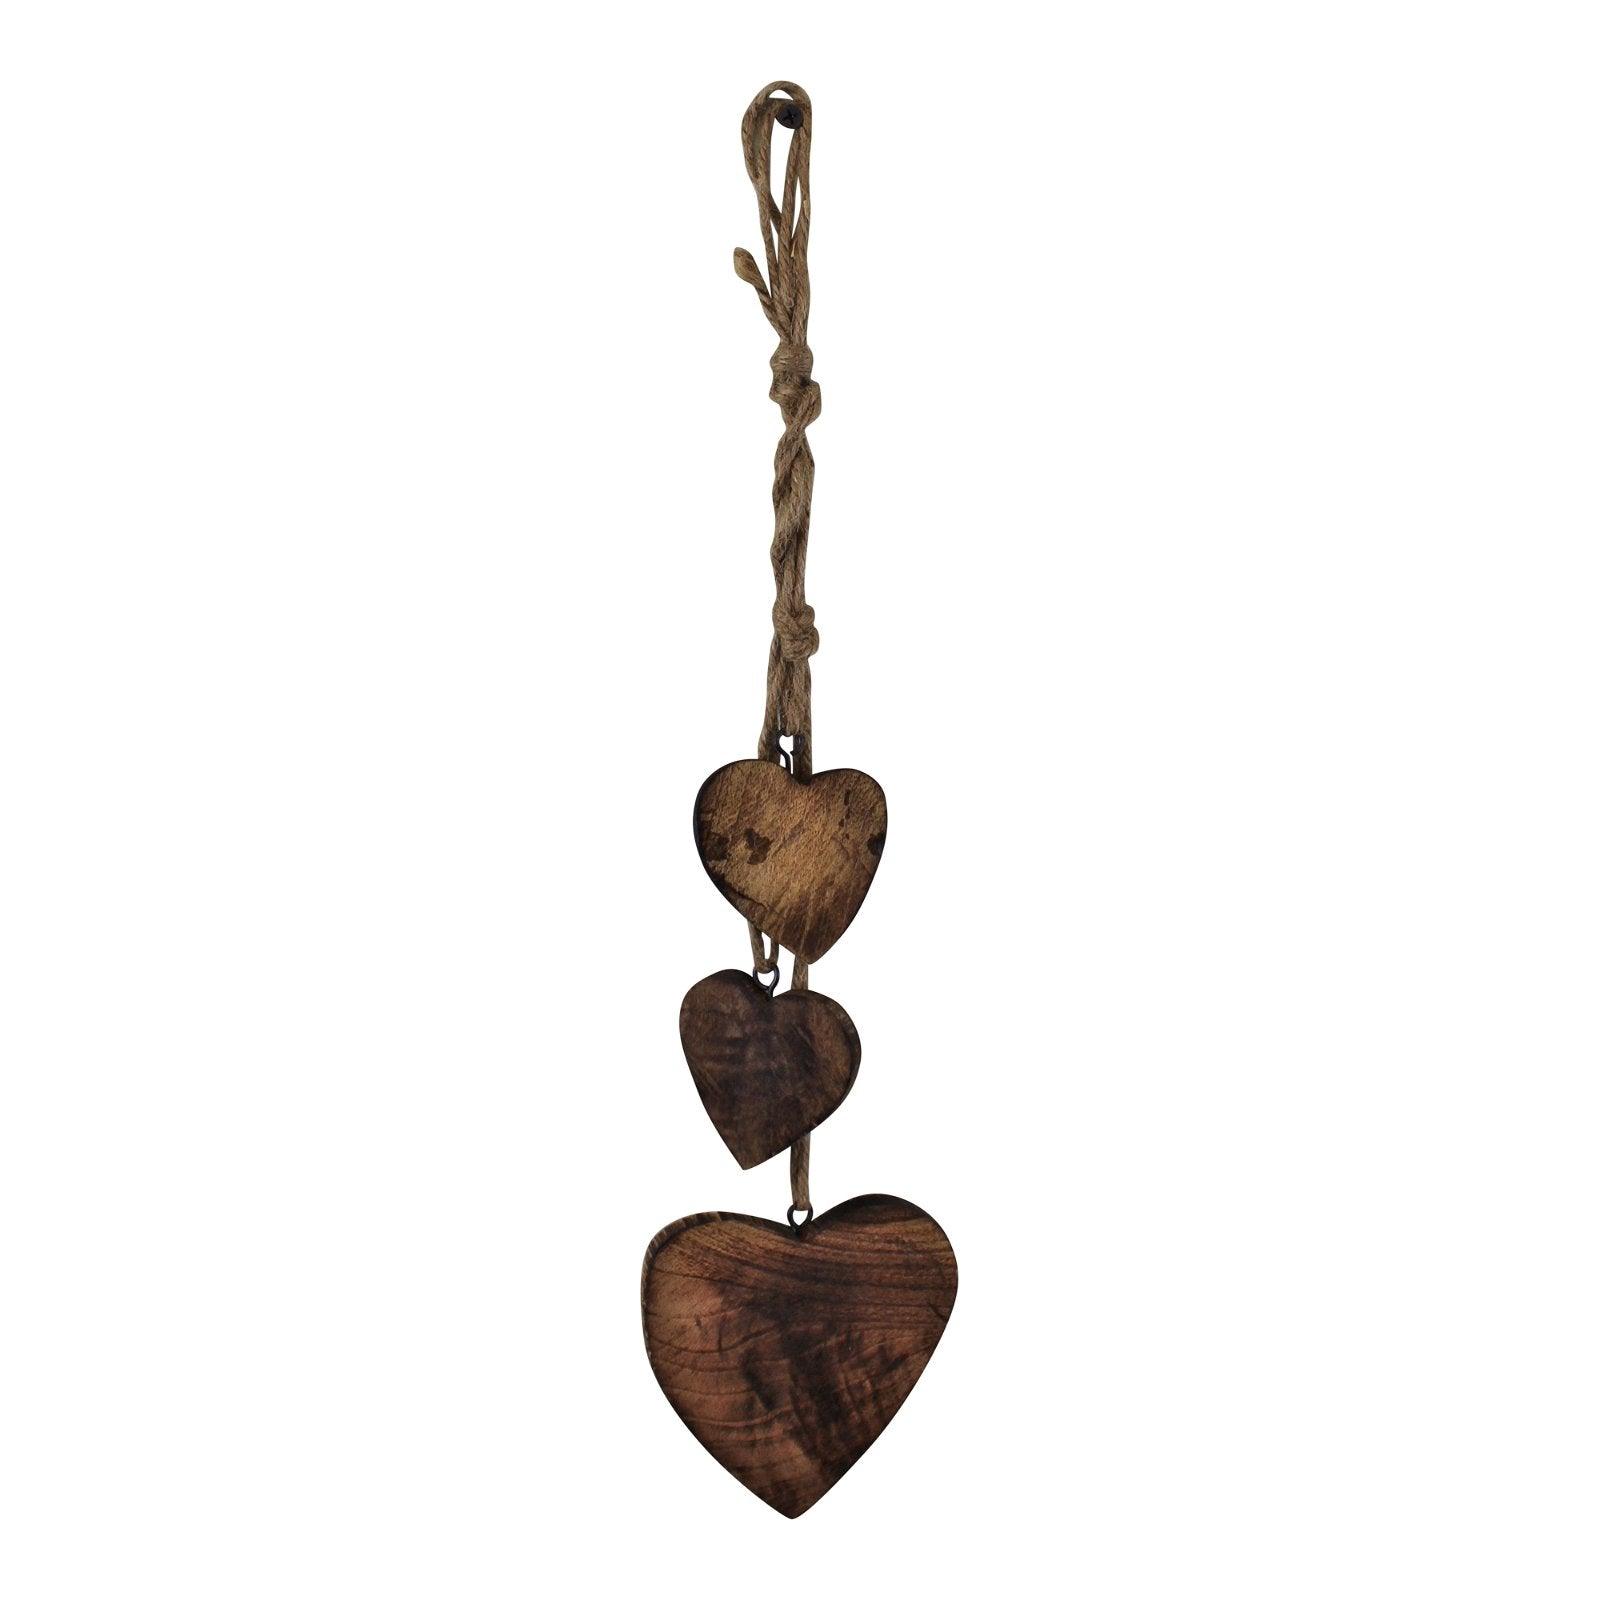 Three Hanging Wooden Heart Decoration, Dark Wood - £12.99 - Ornaments 